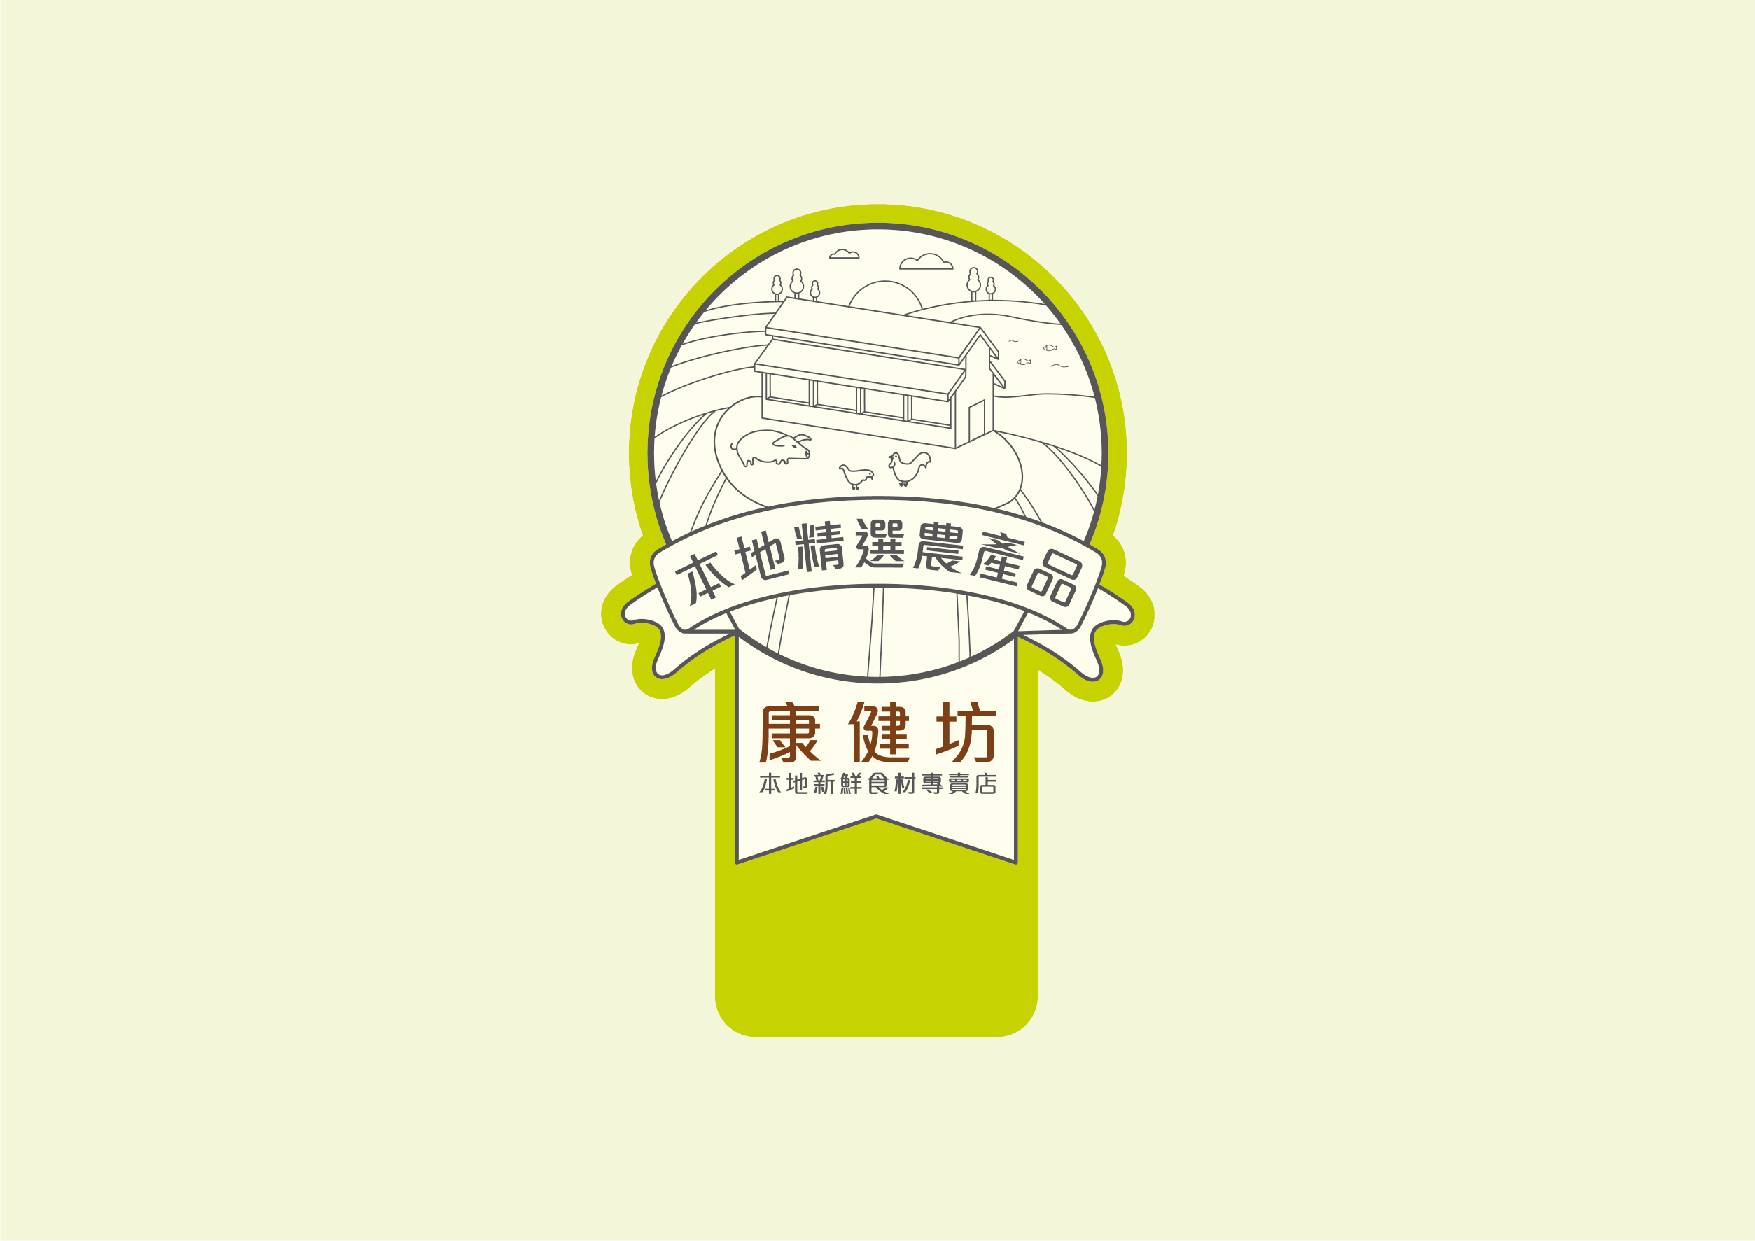 Ka Mei Chicken rebranding for food packaging sticker with farmhouse